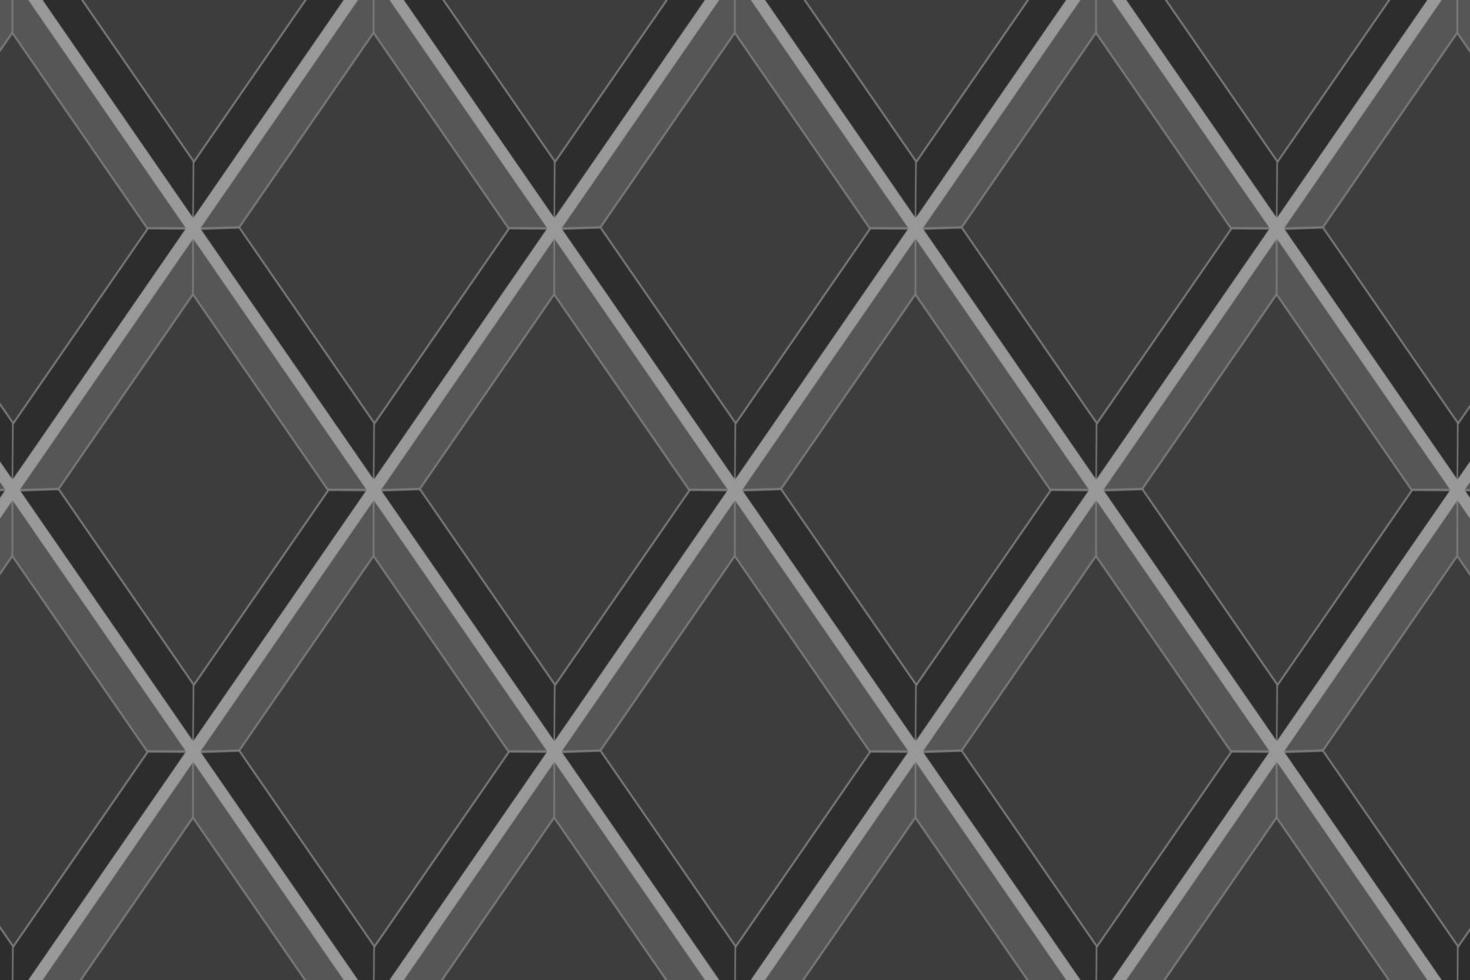 Black rhombus tile background. Kitchen backsplash texture. Bathroom or toilet ceramic wall or floor diamond mosaic surface. Interior or exterior decoration seamless pattern vector